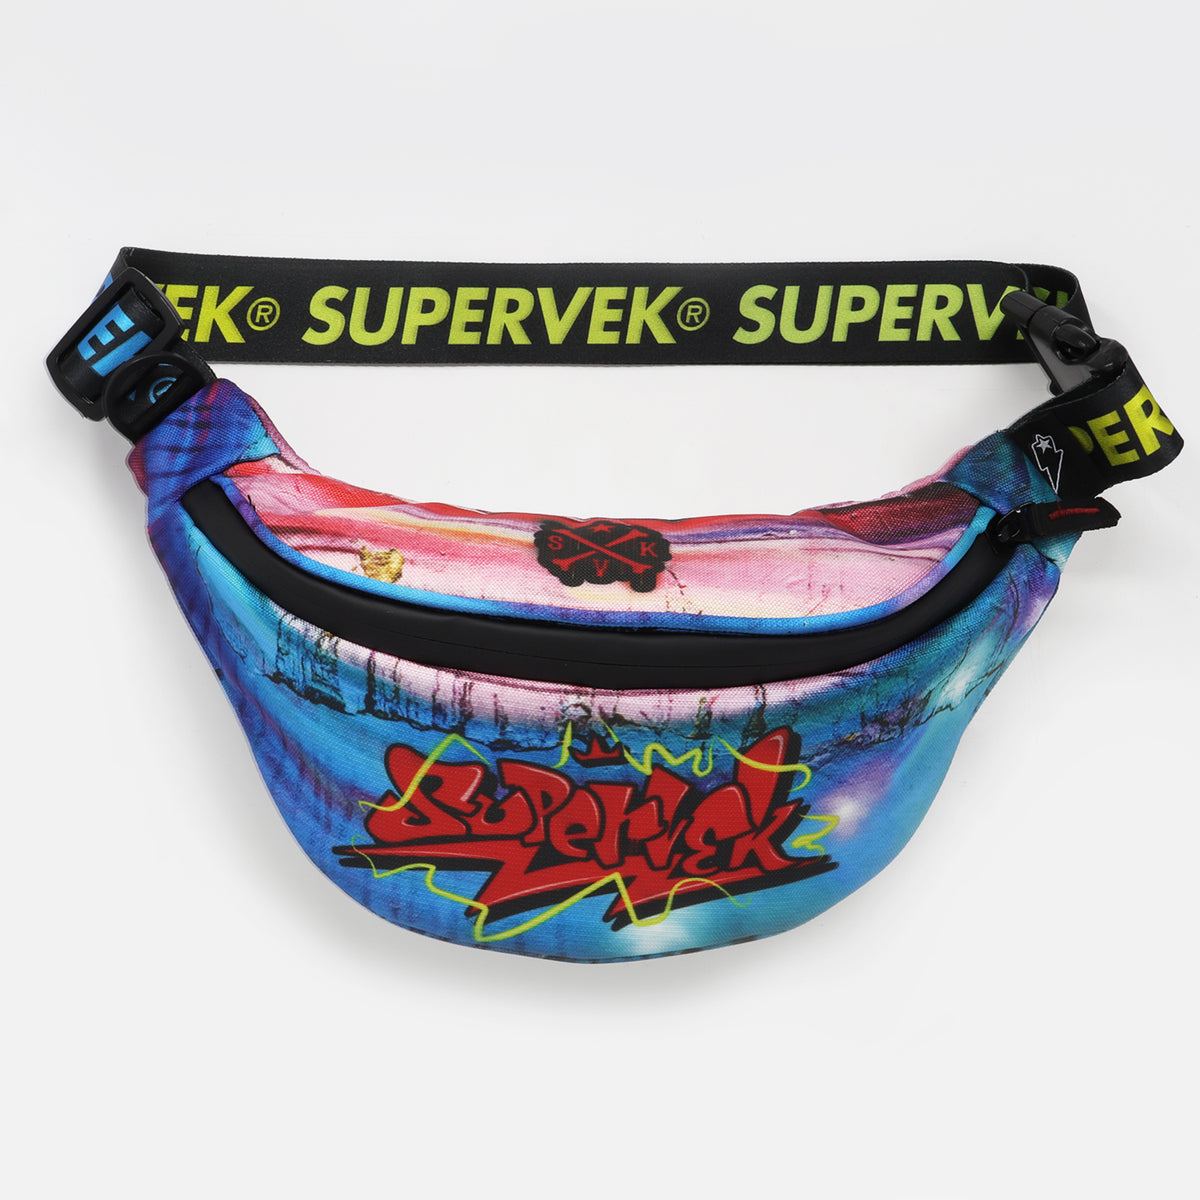 Supervek Crossbody Slinger - Graffiti - Urban Functional Fanny Hip Bag for Everyday Essentials